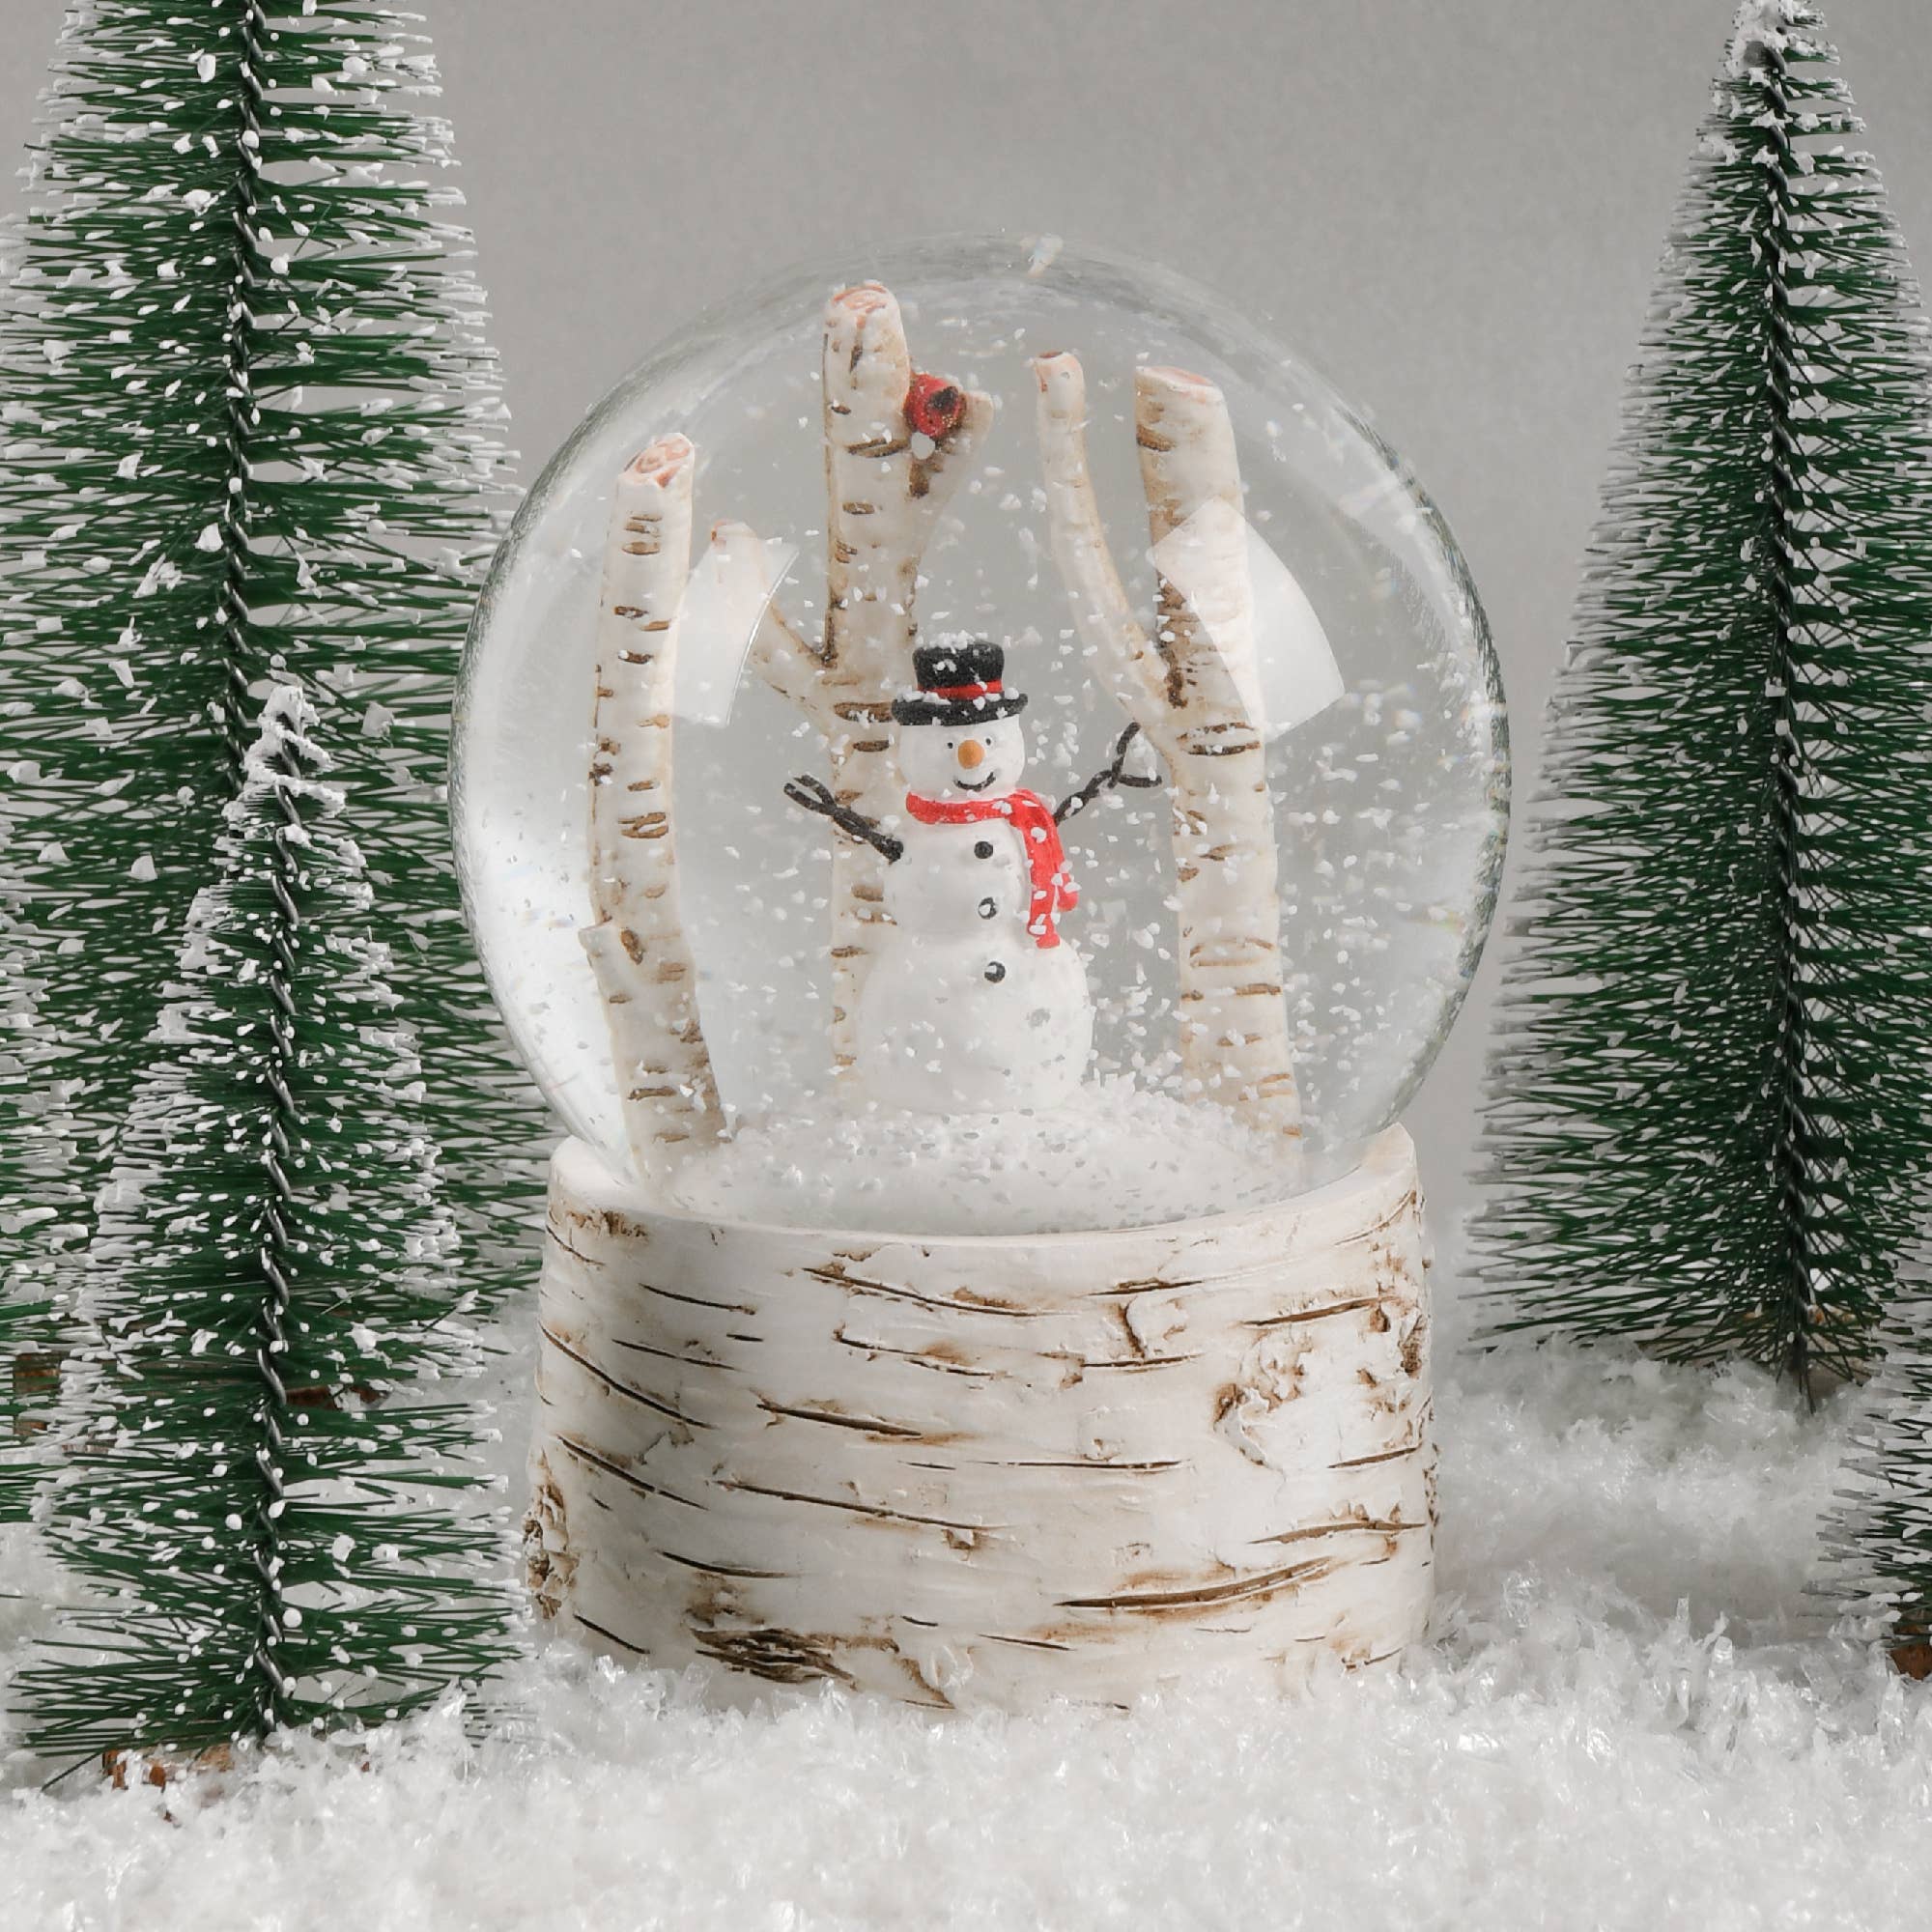 Golden Christmas Tree Snow Globe, Handbags & Accessories